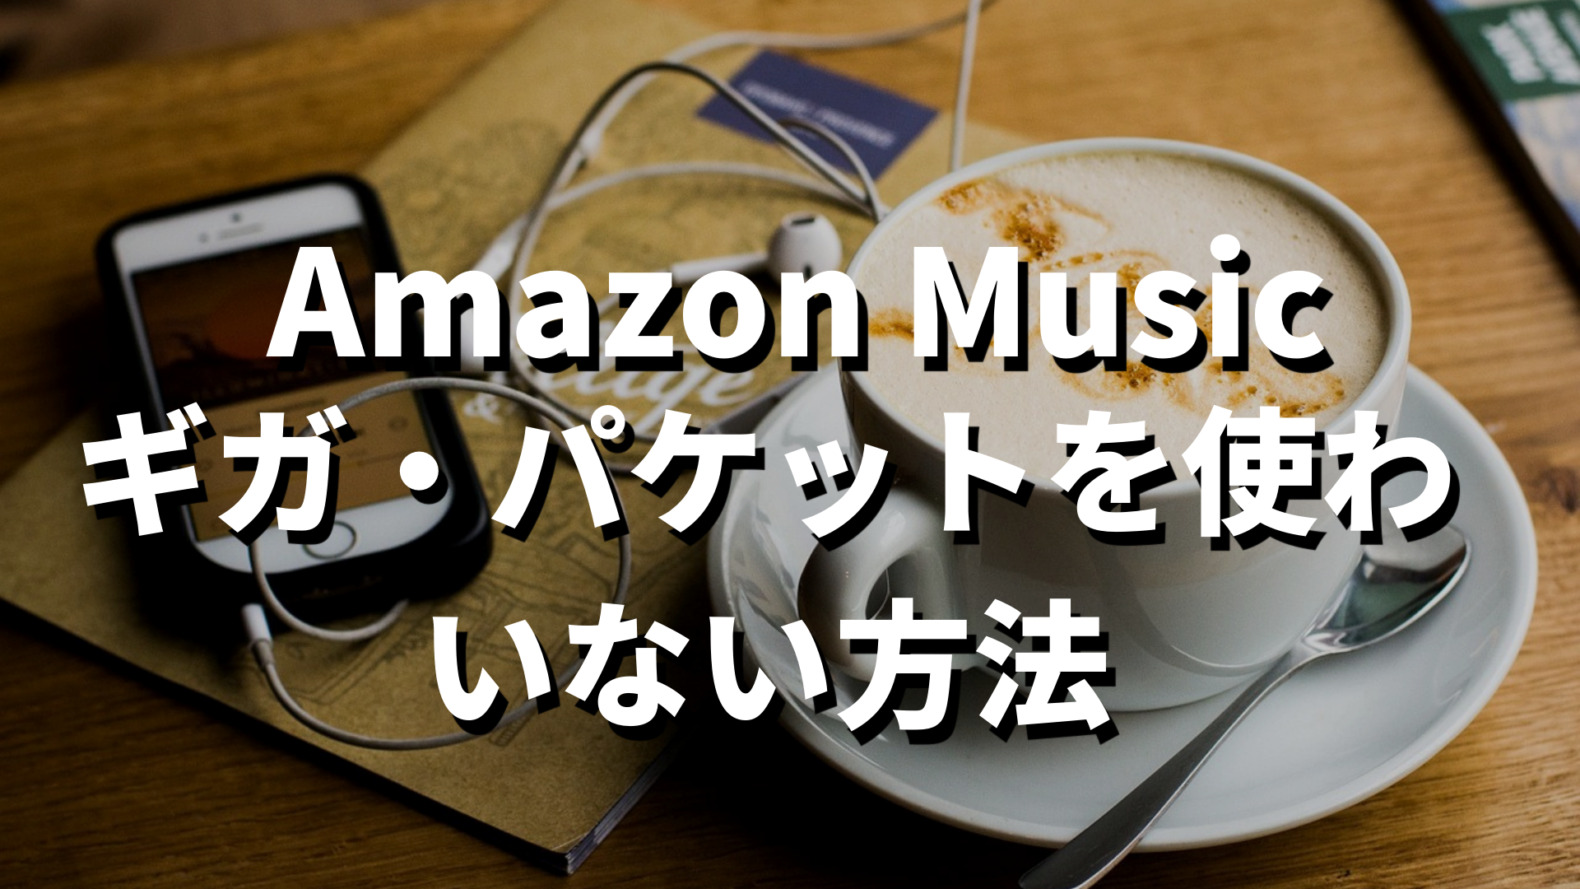 Amazon Musicギガを使わない方法記事のサムネ画像